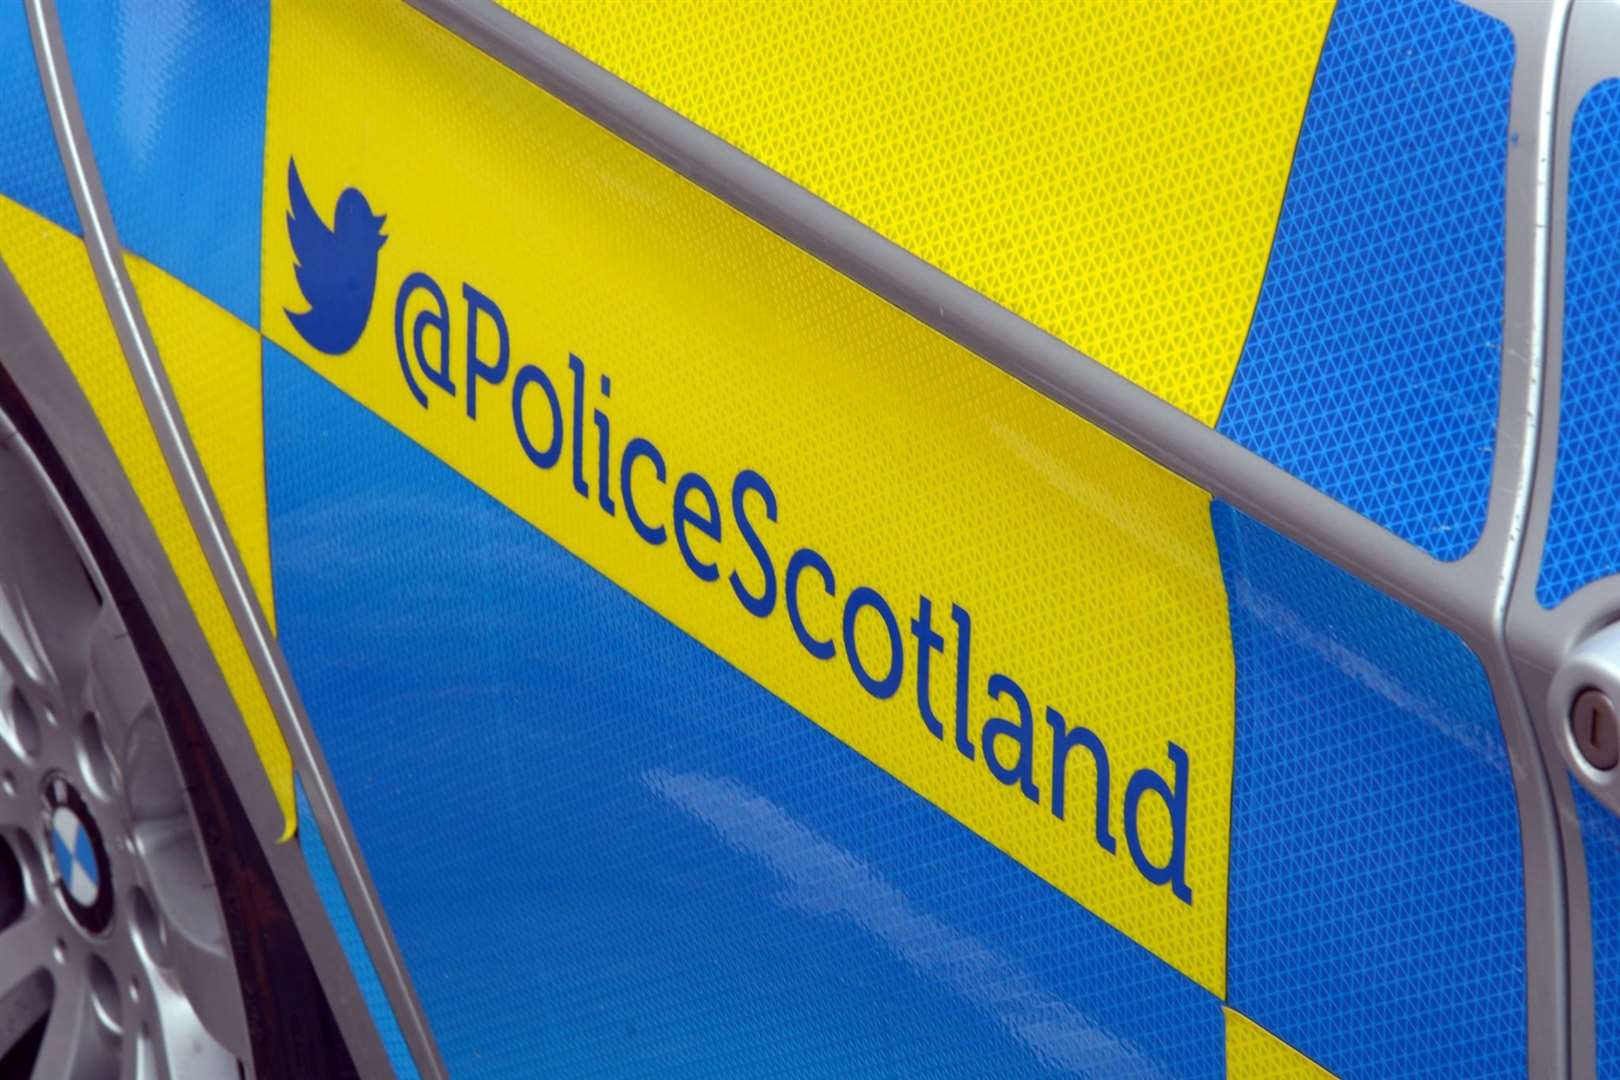 Police Scotland.